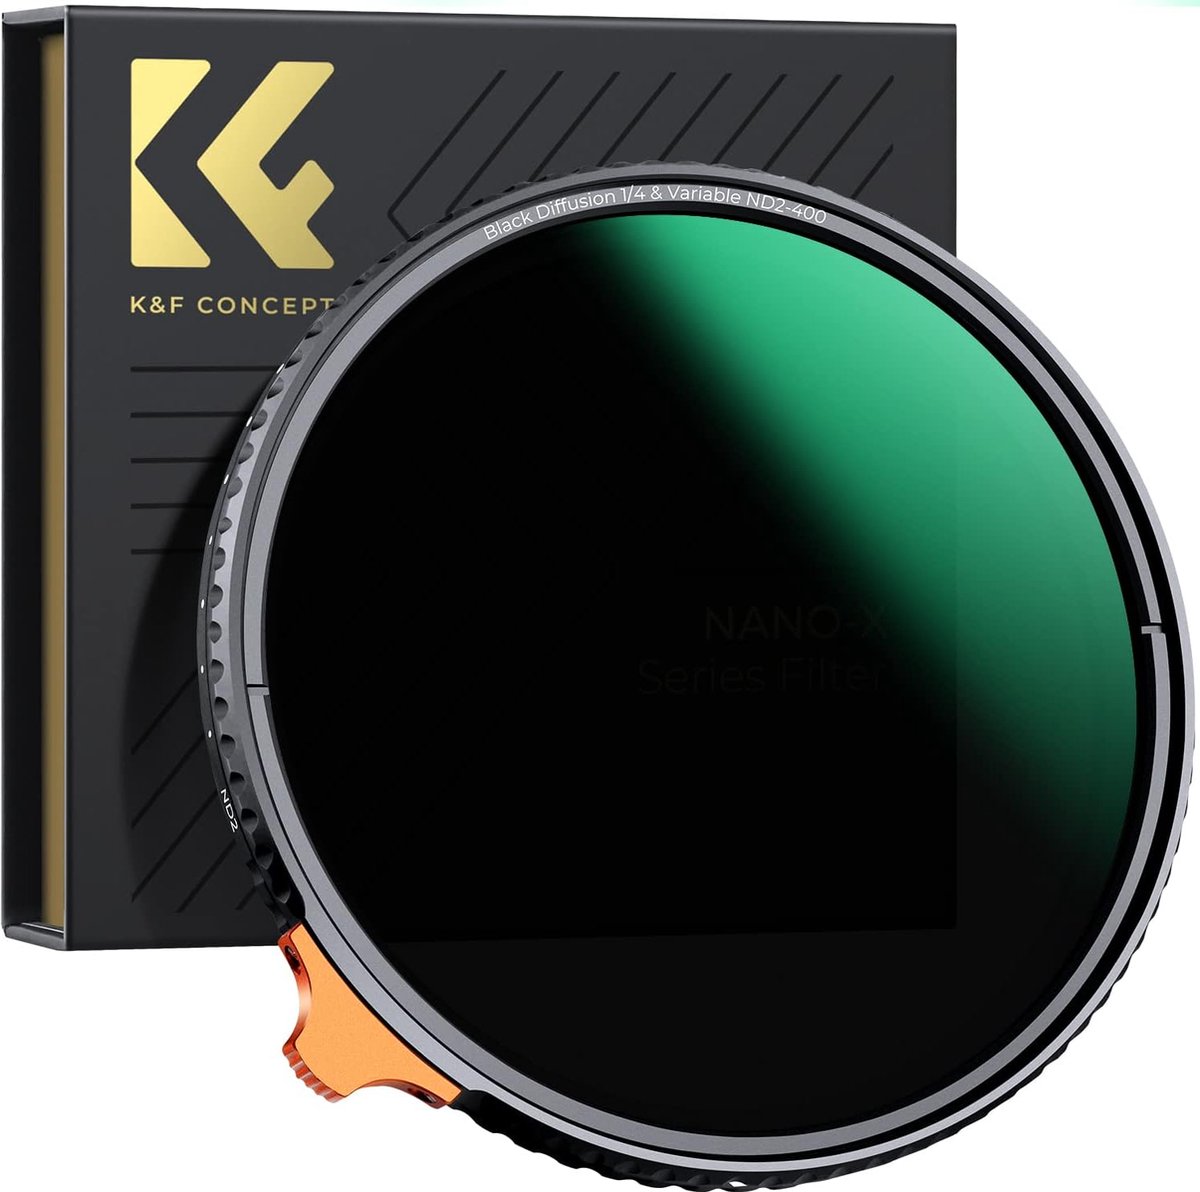 K&F Concept - Nano-X Serie Filter 72mm - Zwart-Mist 1/4 & Variabele ND2-ND400 2-in-1 Multi-Function Filter - Zwart Promist 1/4 Filter & Variabele ND Filter